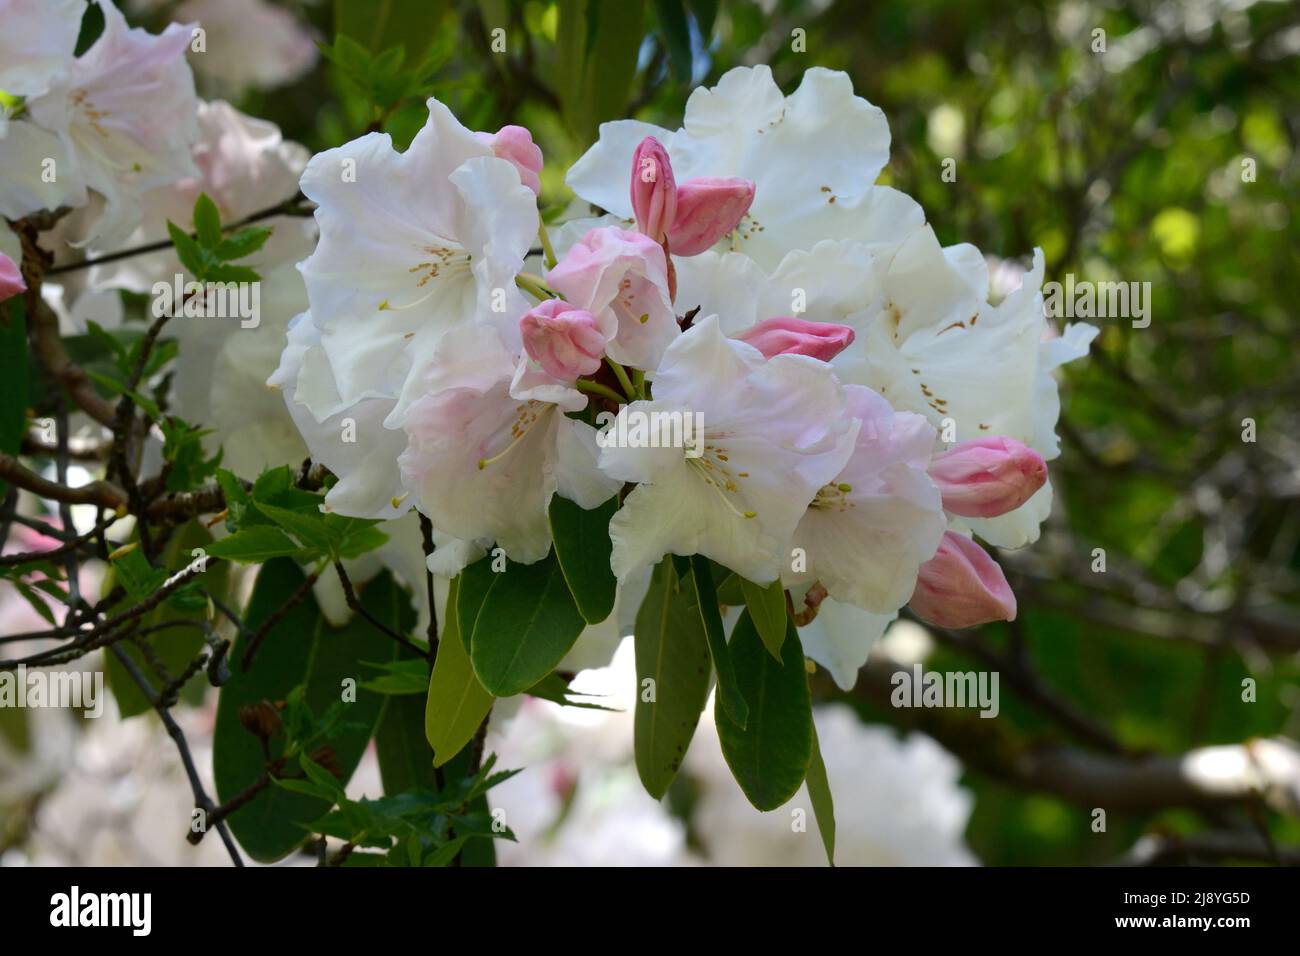 Rhododendron Loden King George Grandes brotes perfumados de color rosa que se abren a flores blancas Foto de stock